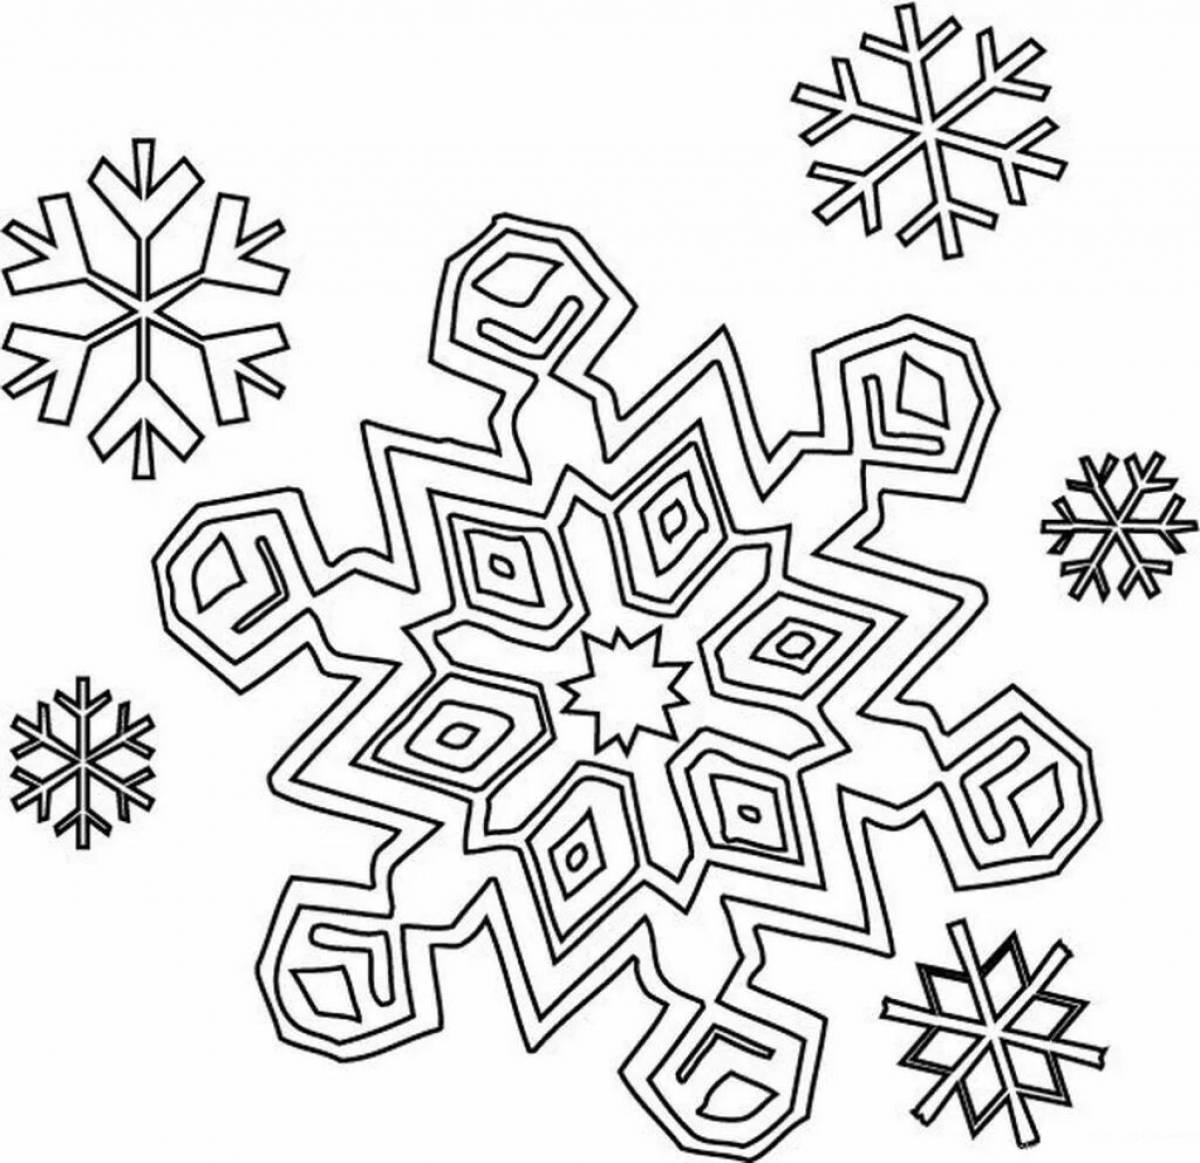 Inspirational snowflake coloring book